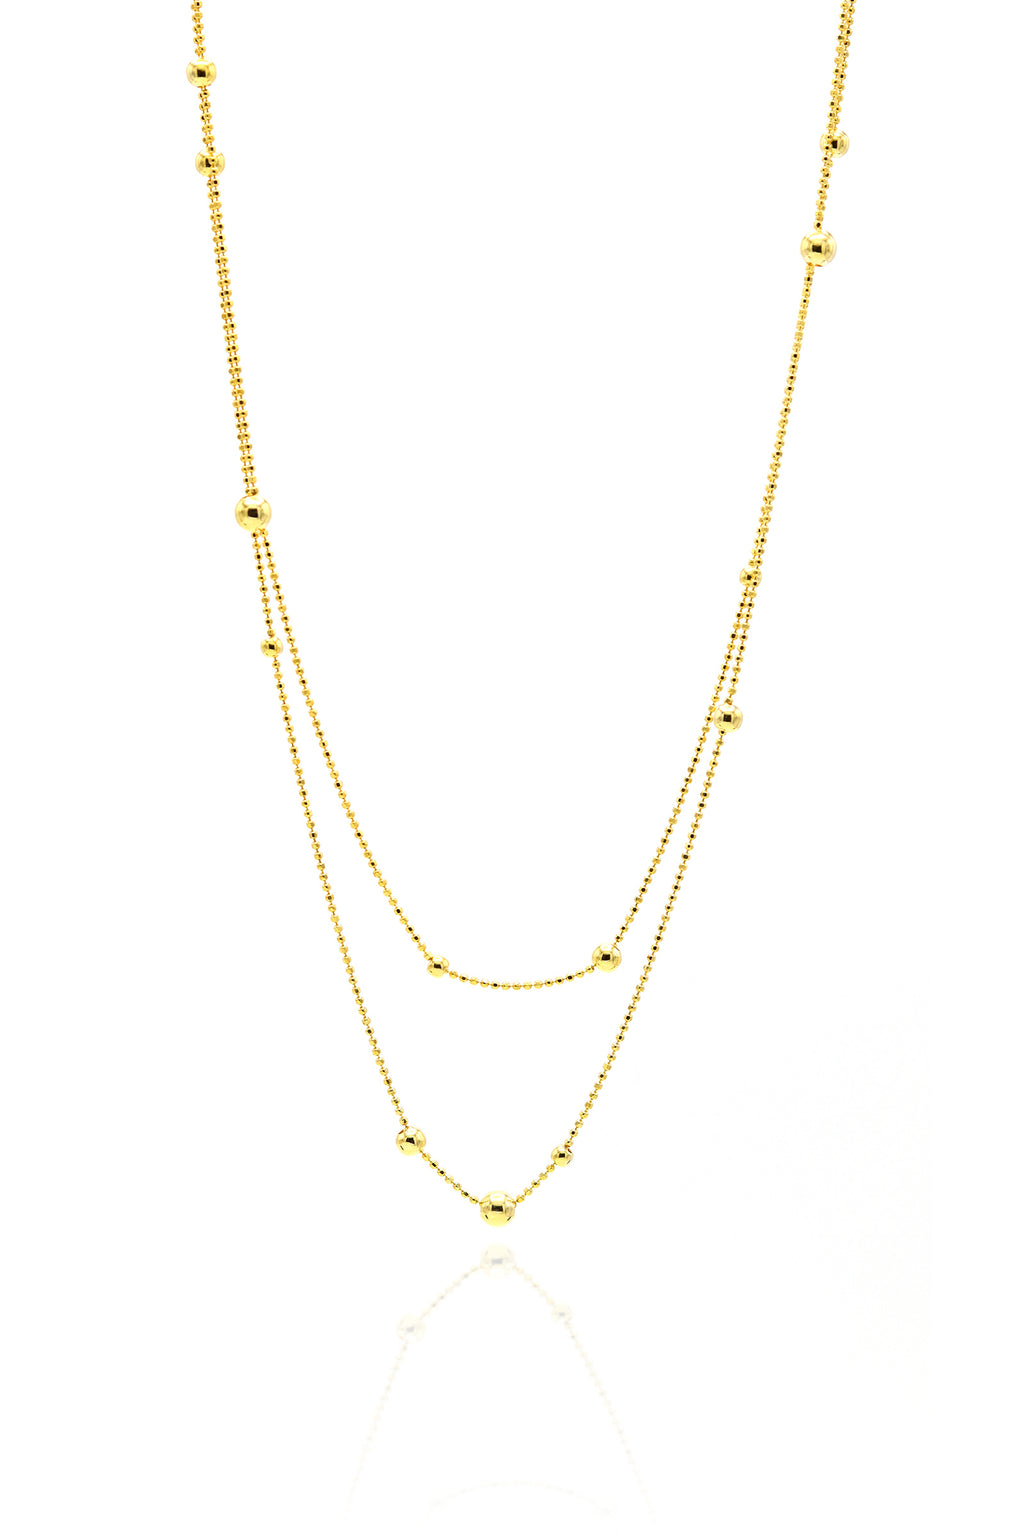 Dorika Model Gold Plated Silver Necklace (NG201019792)